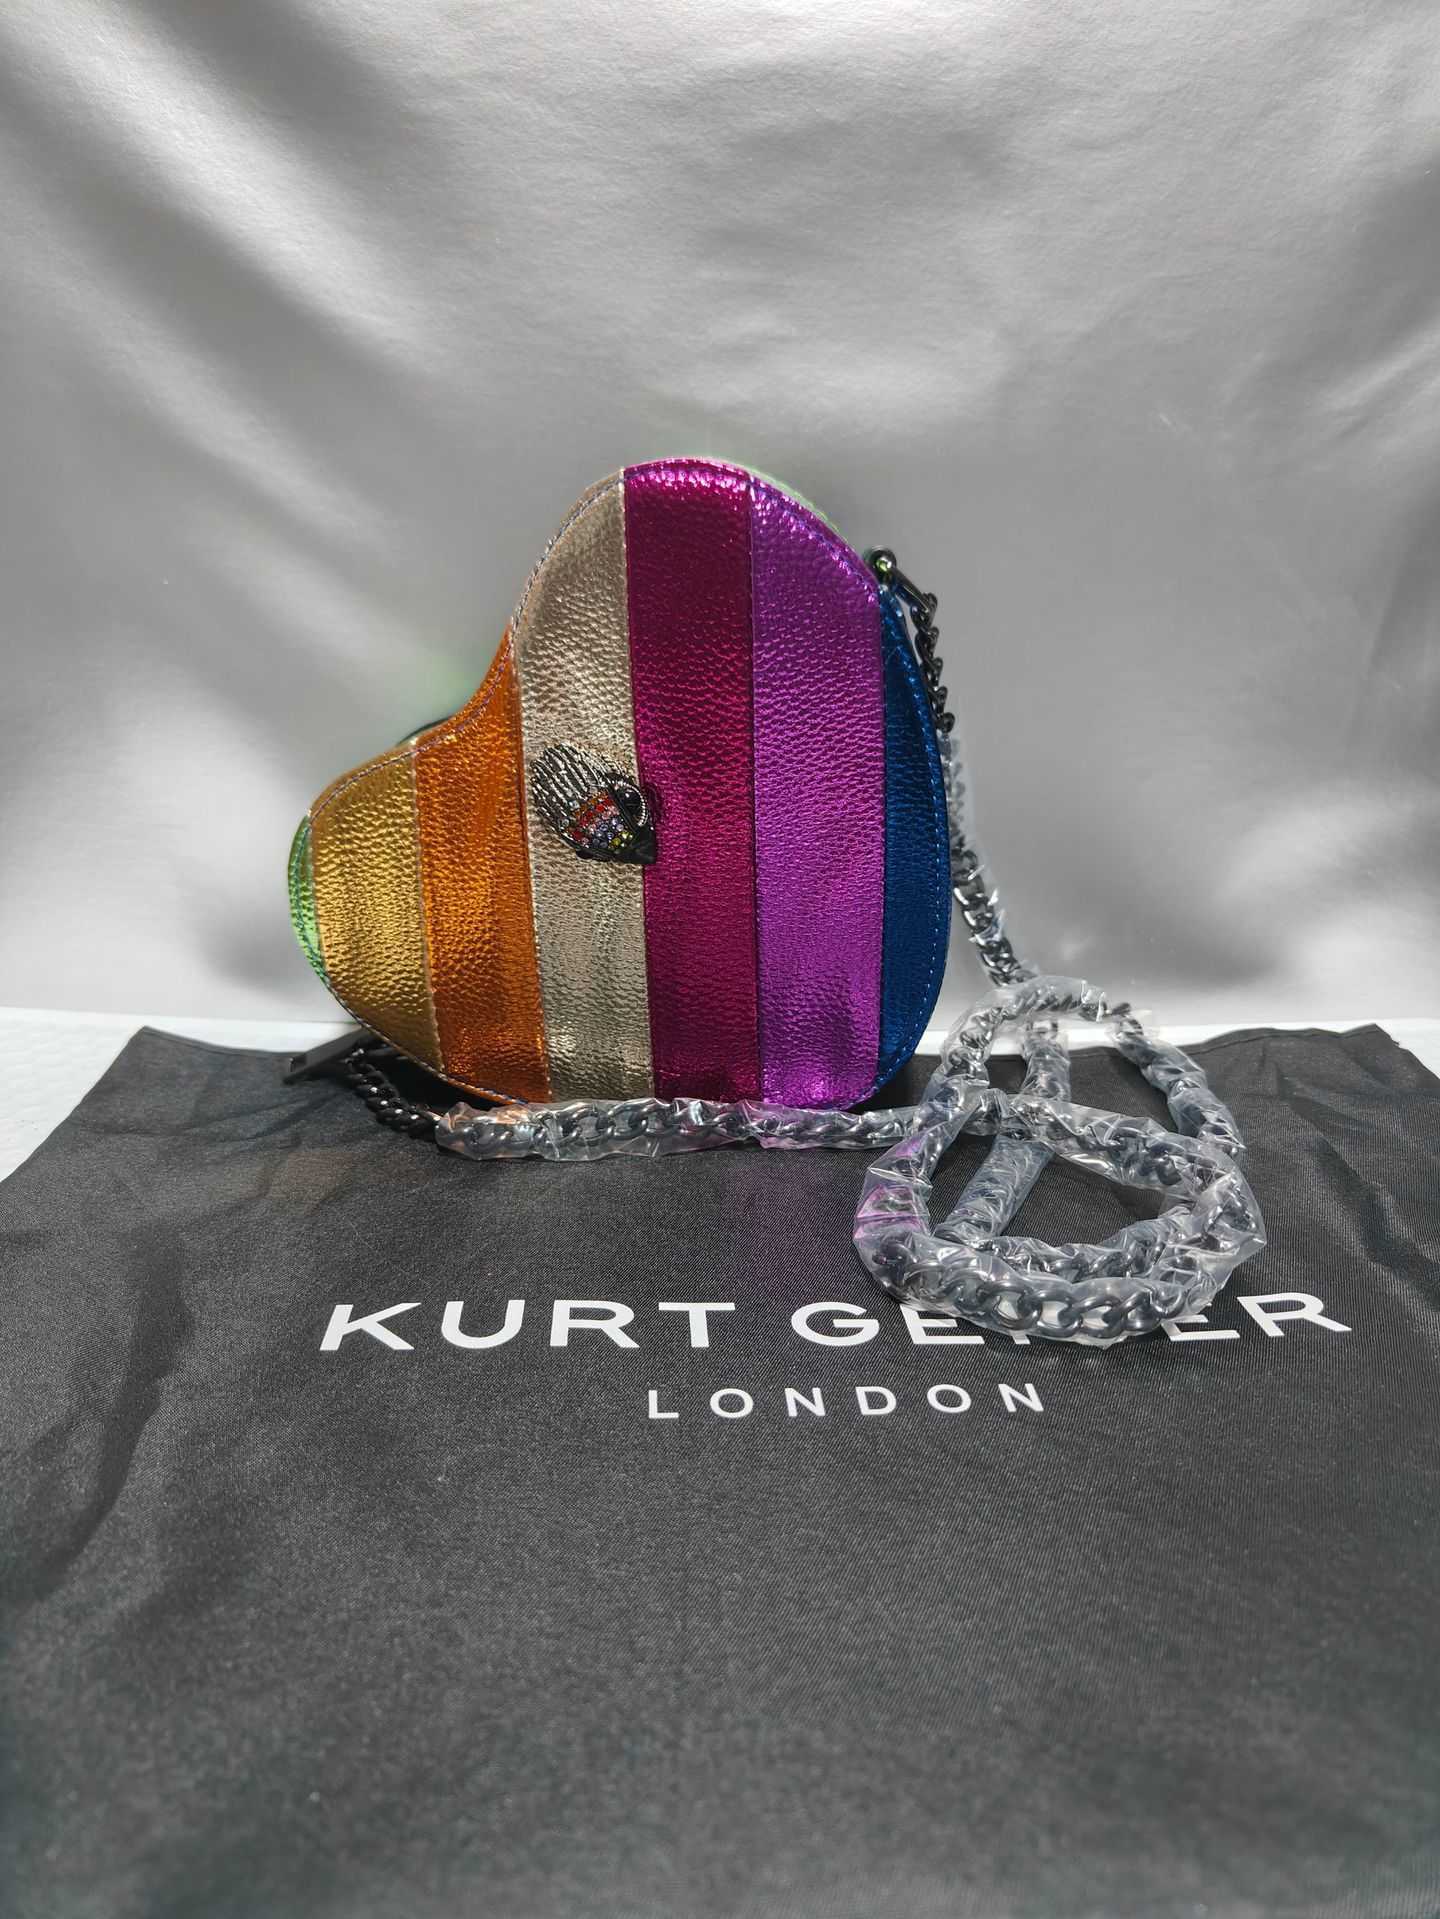 

kurt geiger handbags Kurt Geiger London New Eagle Head Bag Women's Heart shaped Bag Contrast Stereo Bag, Type i